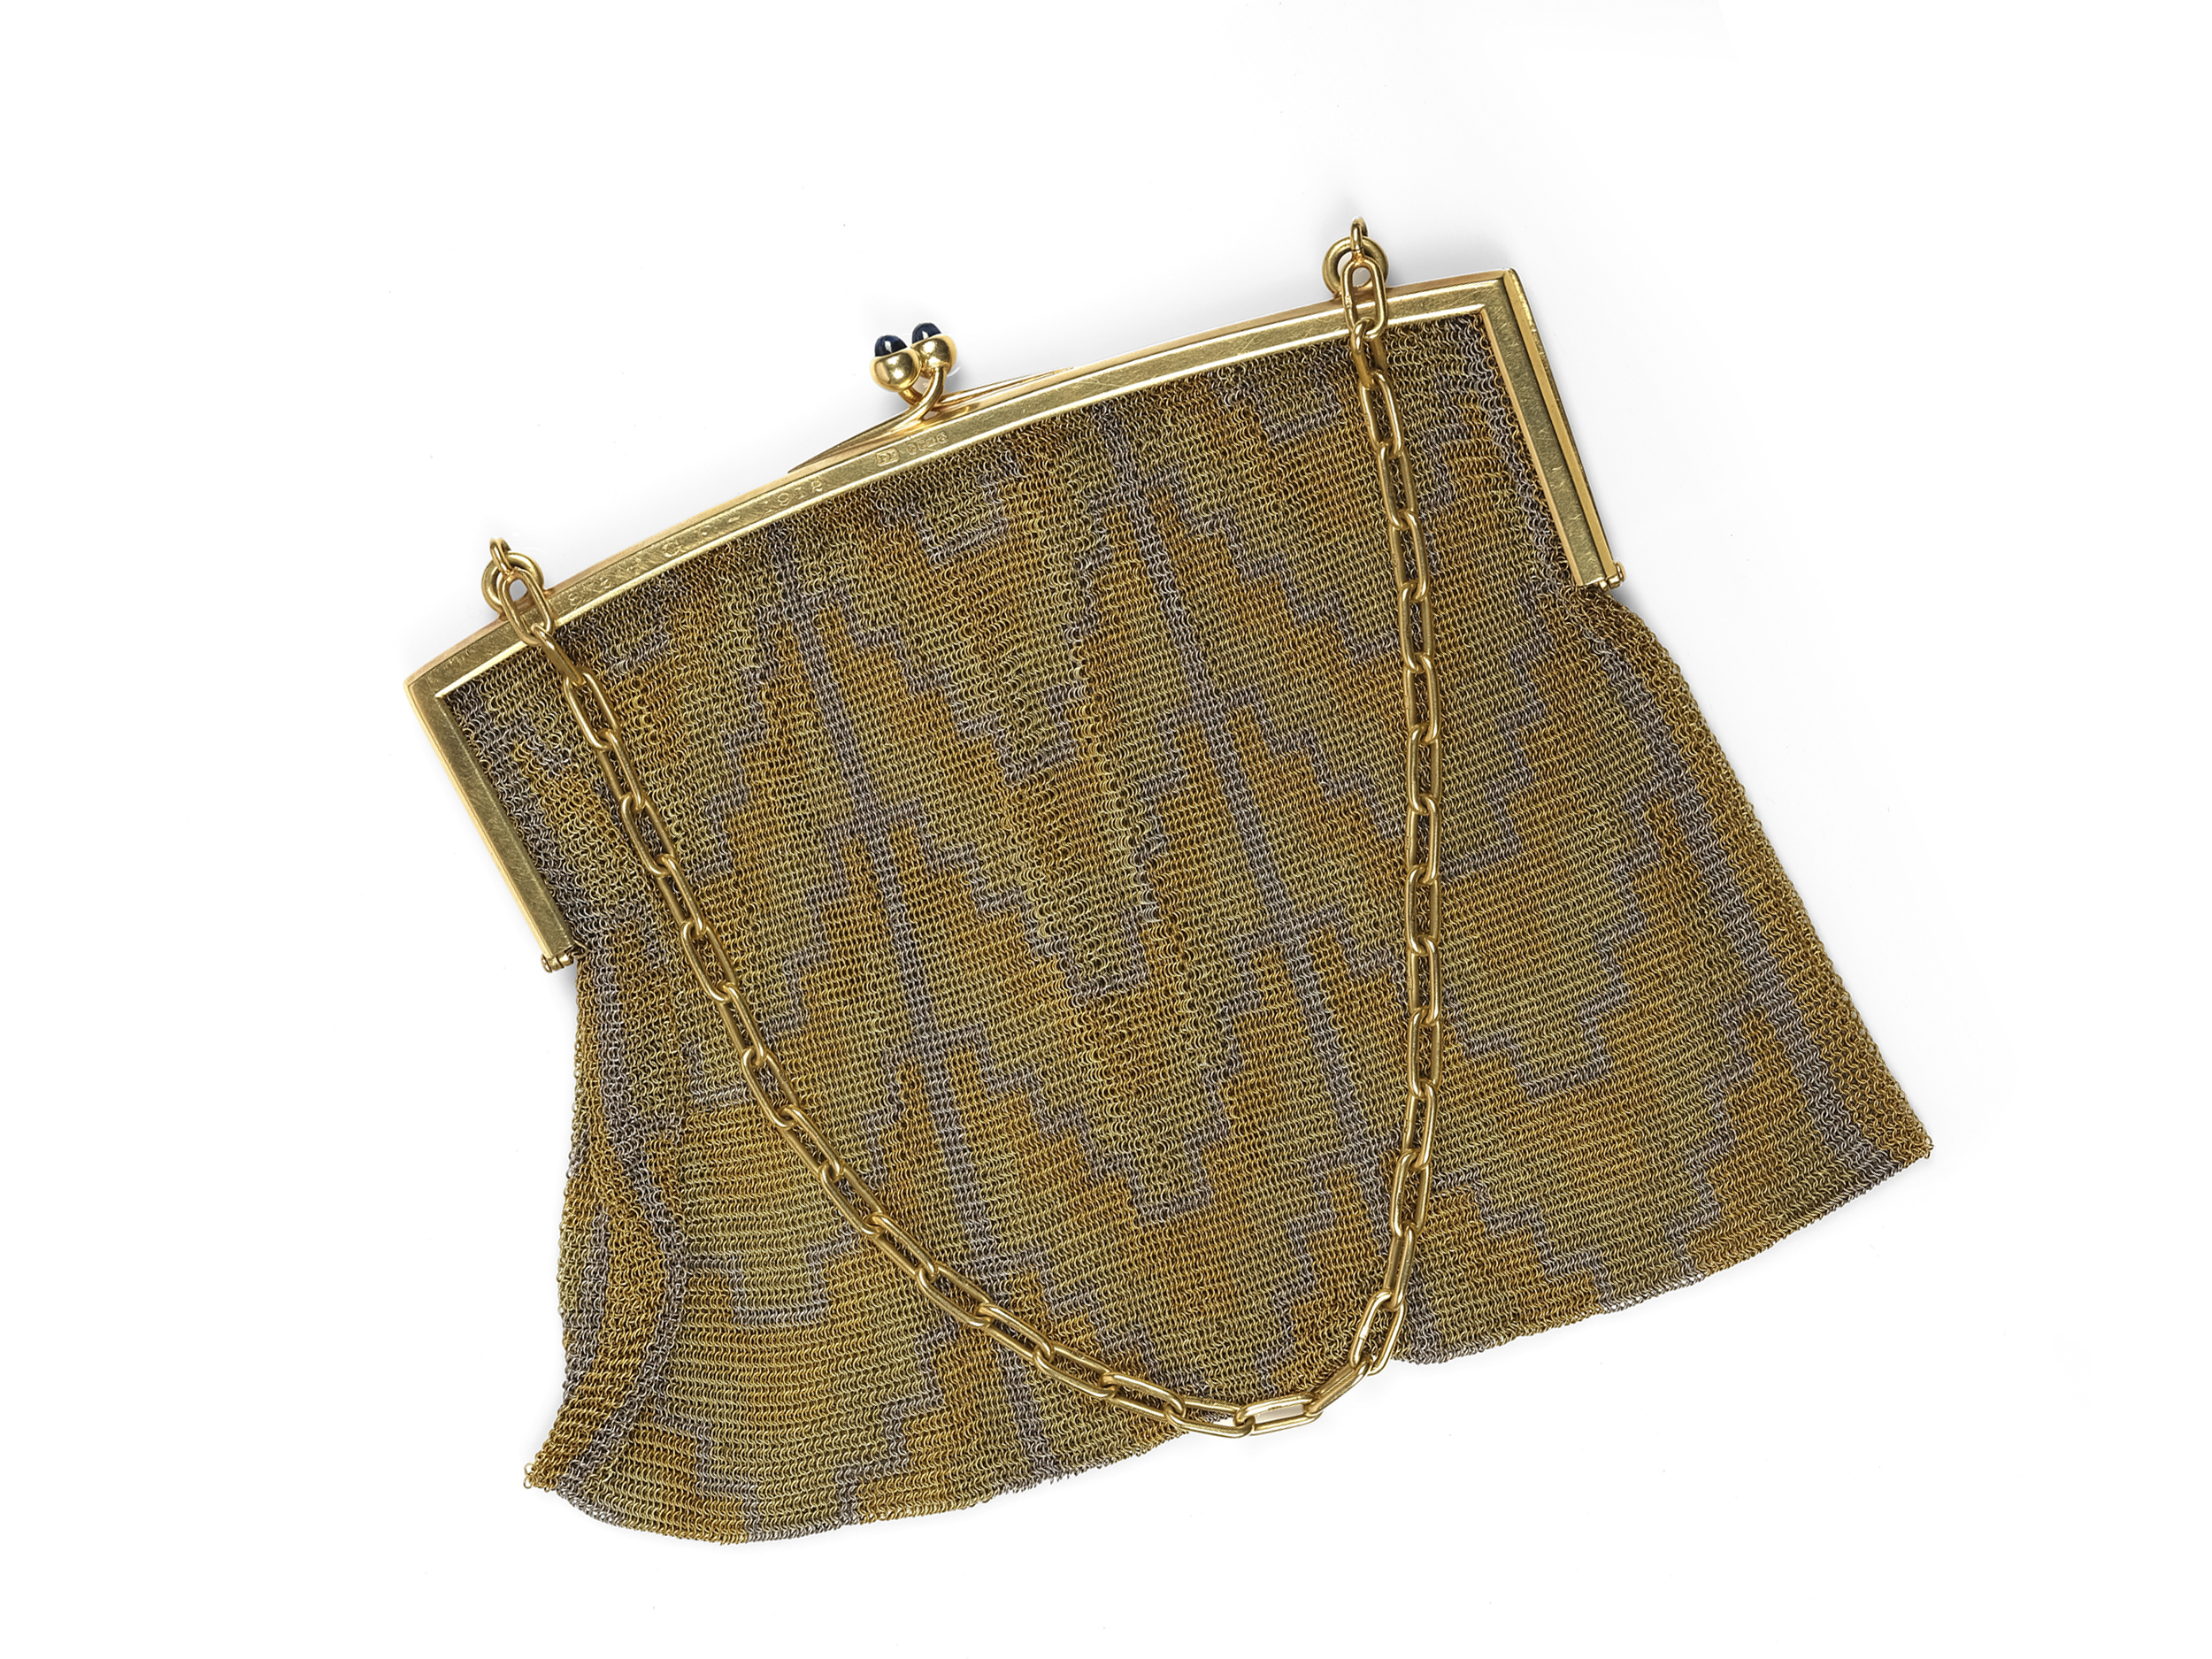 Tiffany & Co, evening bag - Image 2 of 7